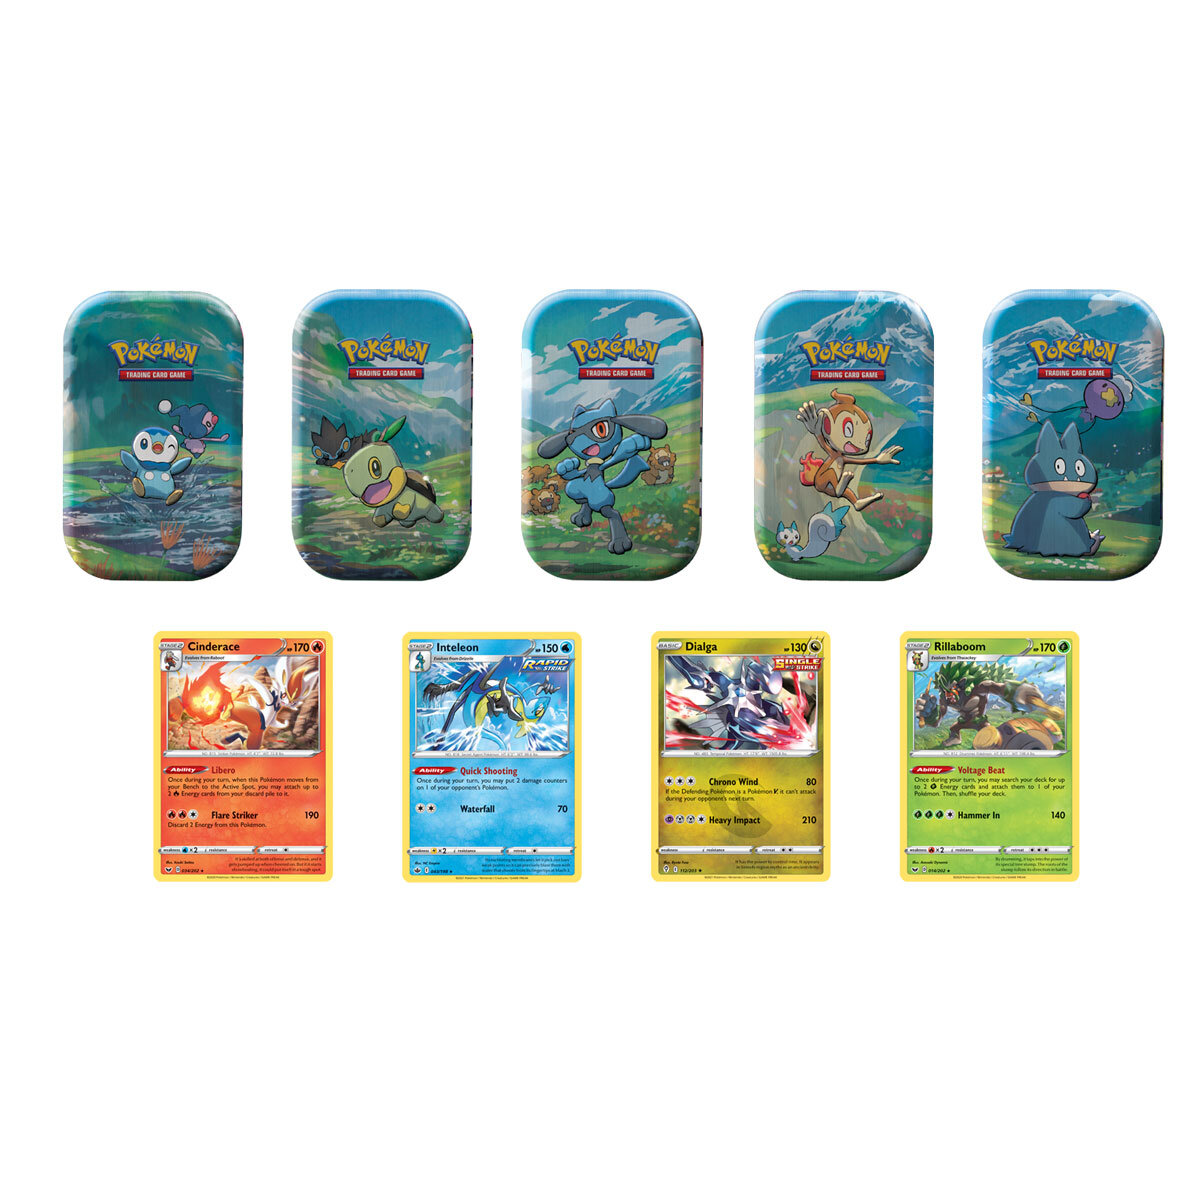 Buy Pokemon 5 Pack Mini Tins Sinnoh Stars Overview Image at Costco.co.uk